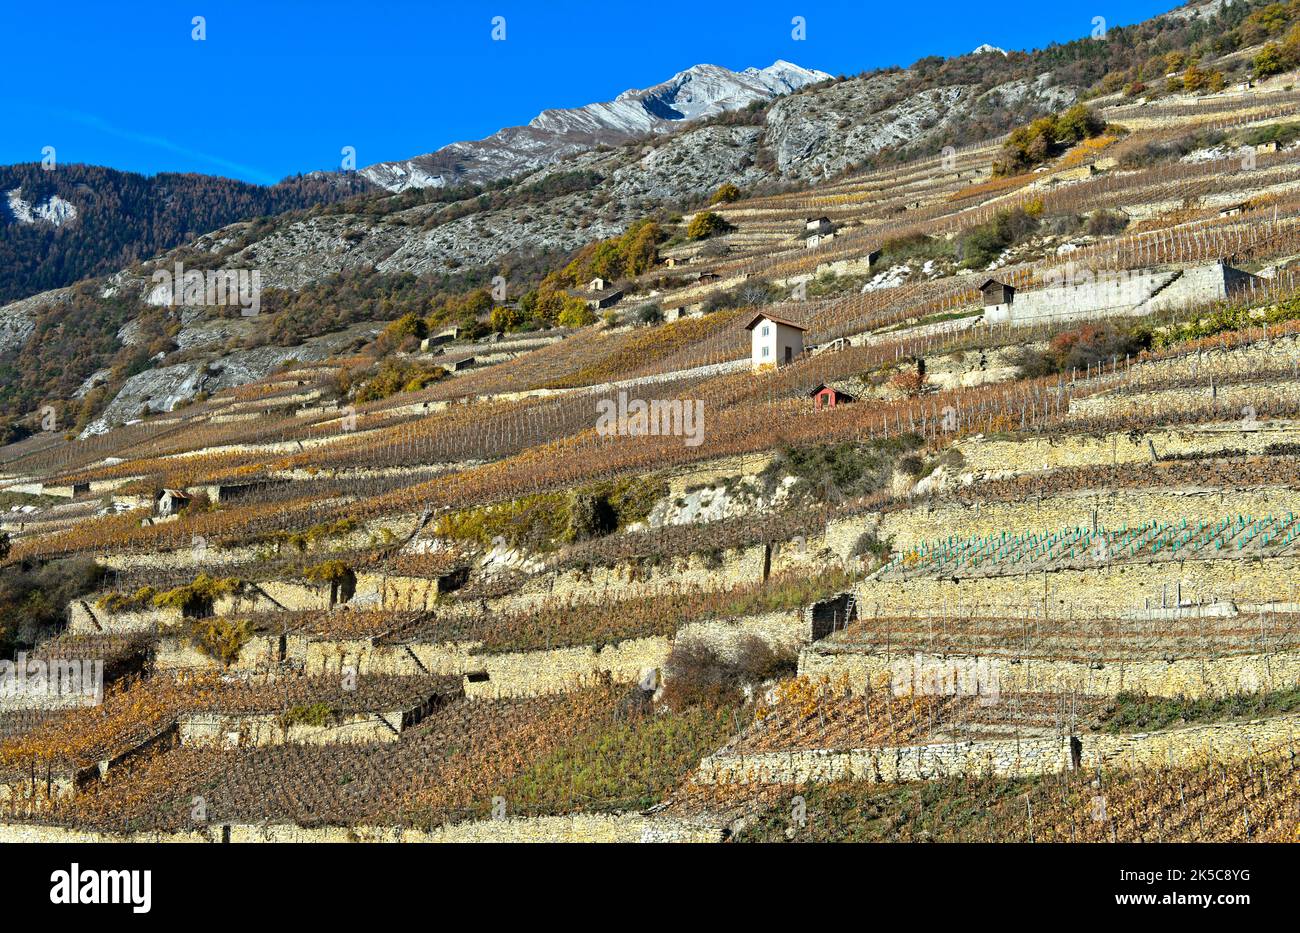 Vineyard terraces in sunny hillside above the Rhone valley, Vetroz, Valais, Switzerland Stock Photo